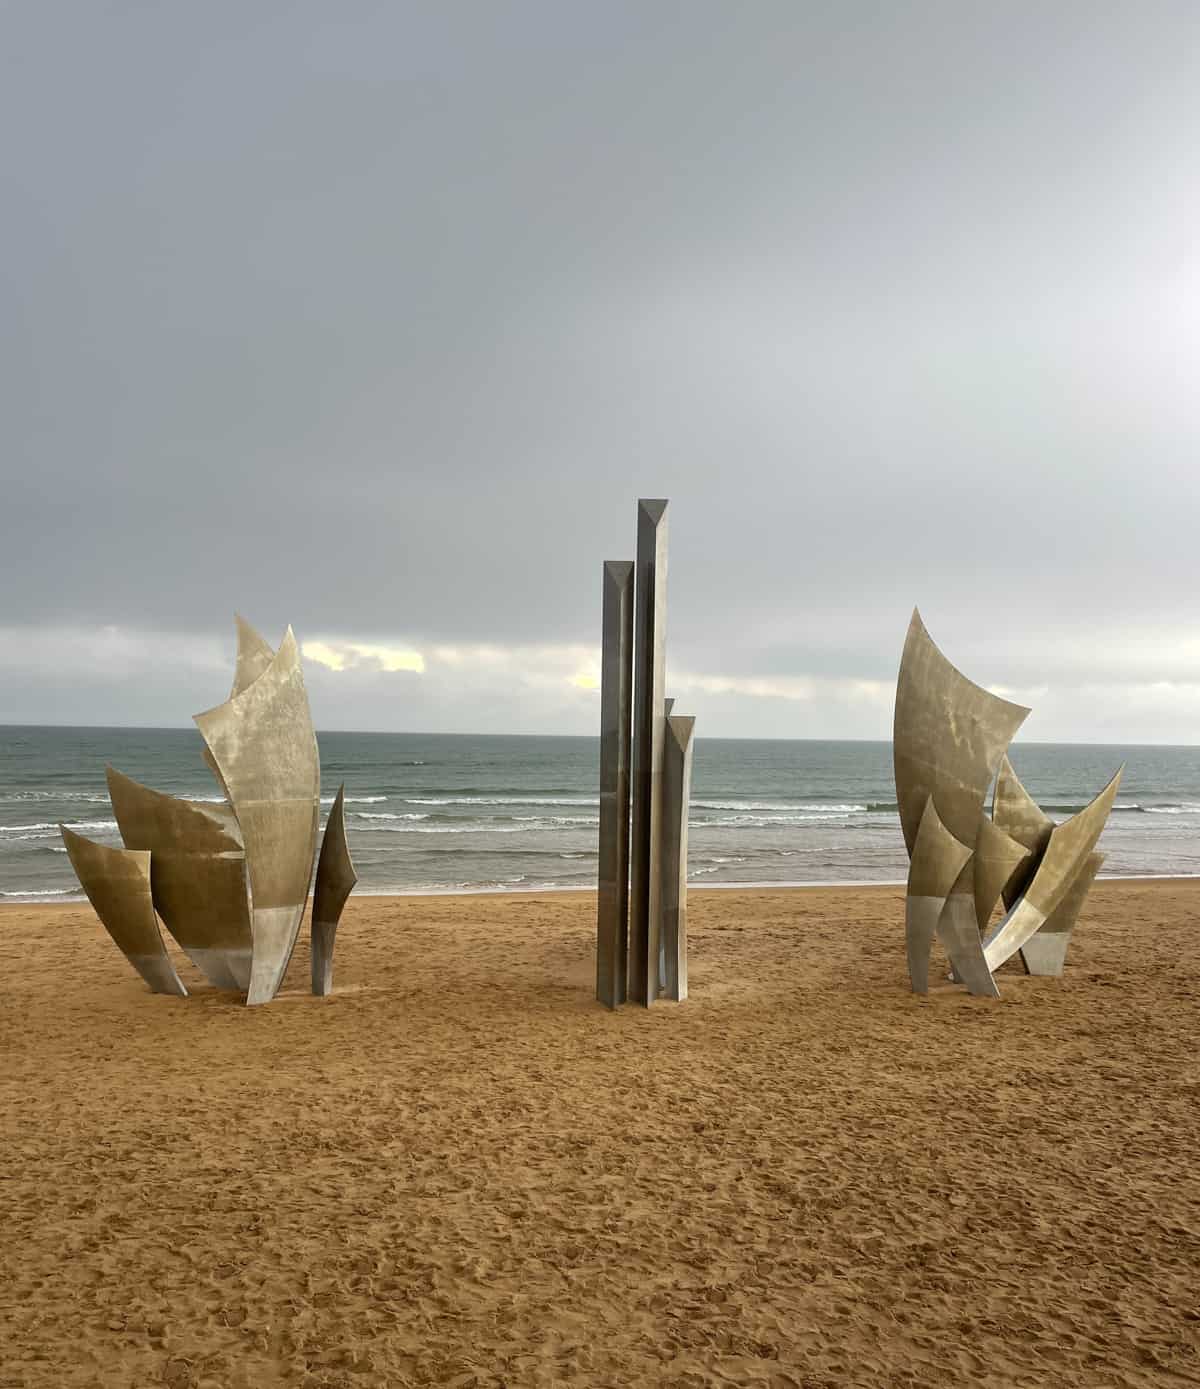 Veterans Memorial at Normandy Beaches.